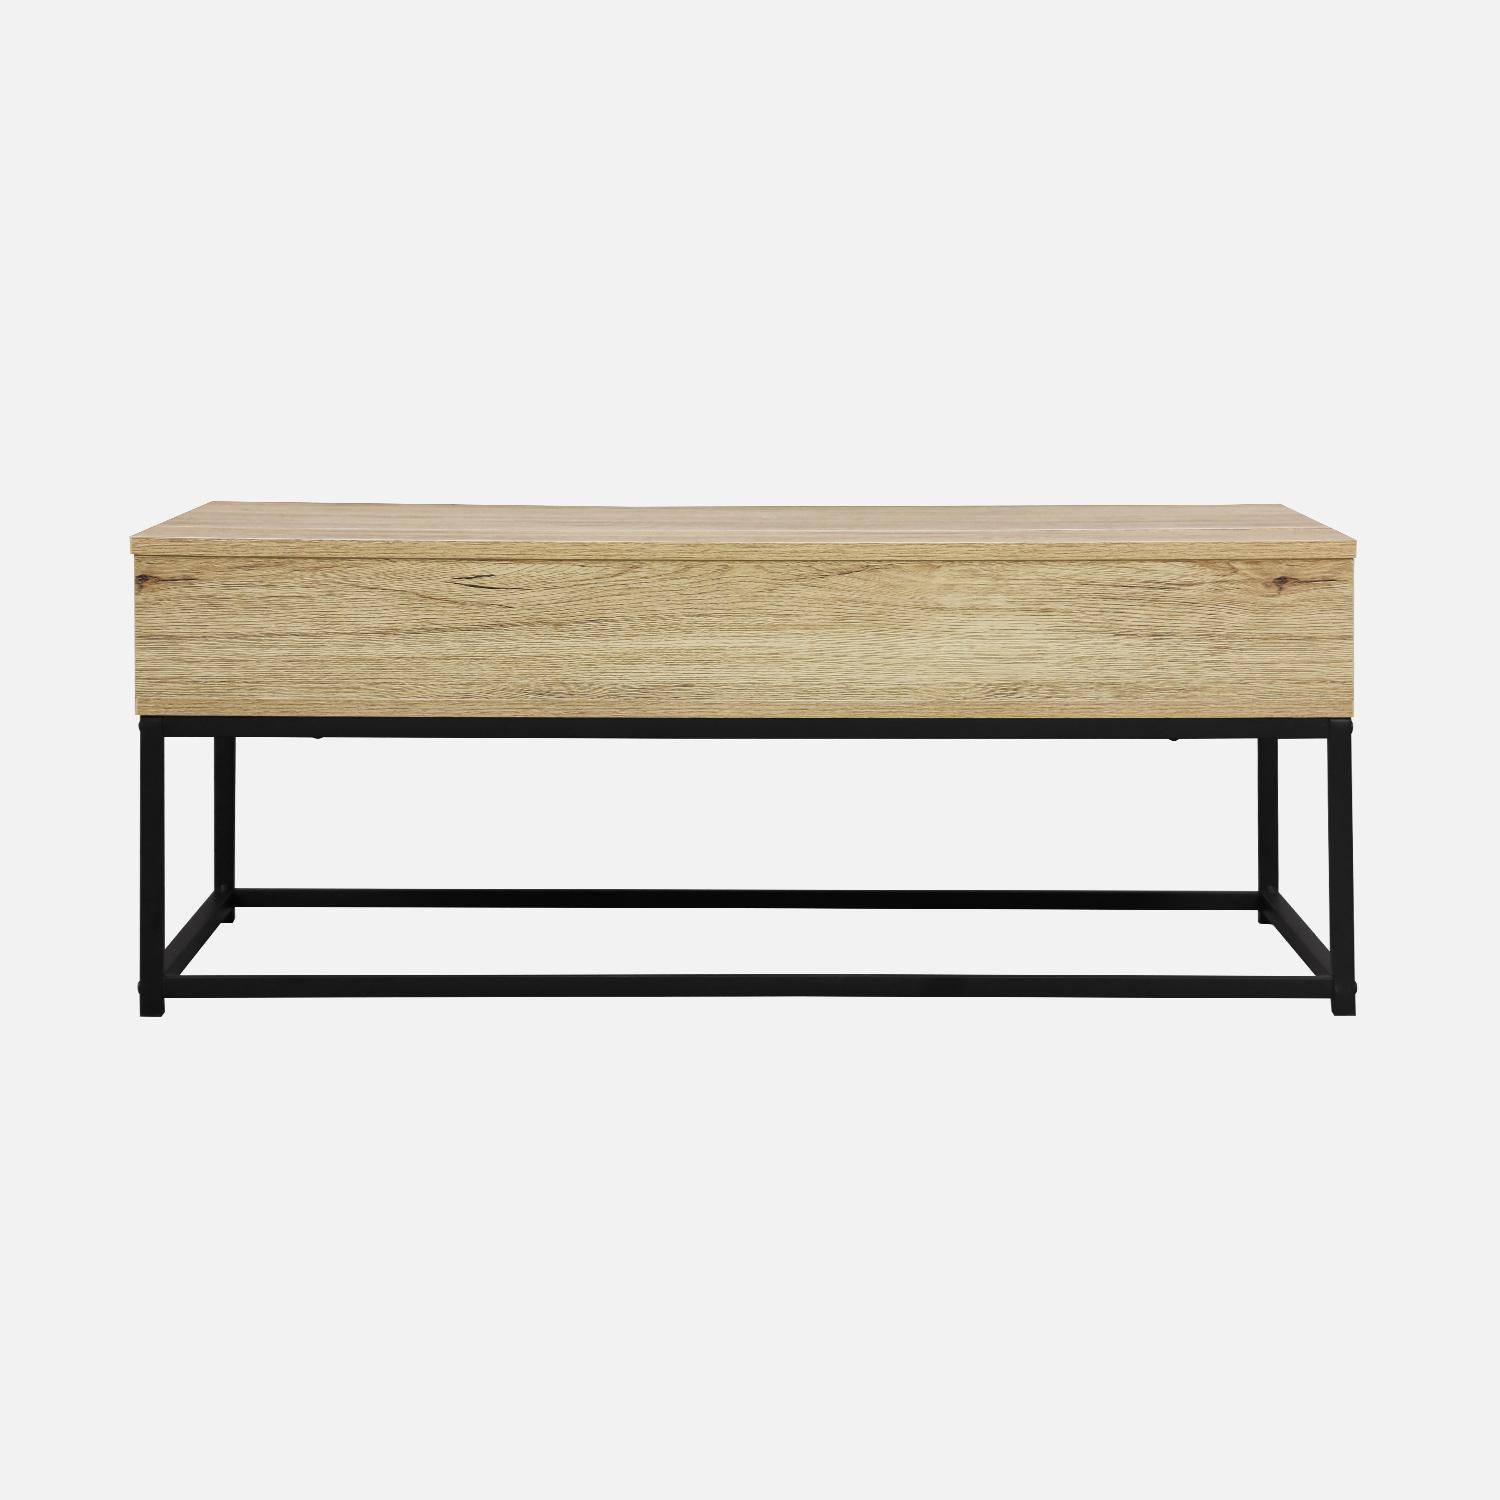 Liftable coffee table, 100x55x40.5cm - Loft,sweeek,Photo6